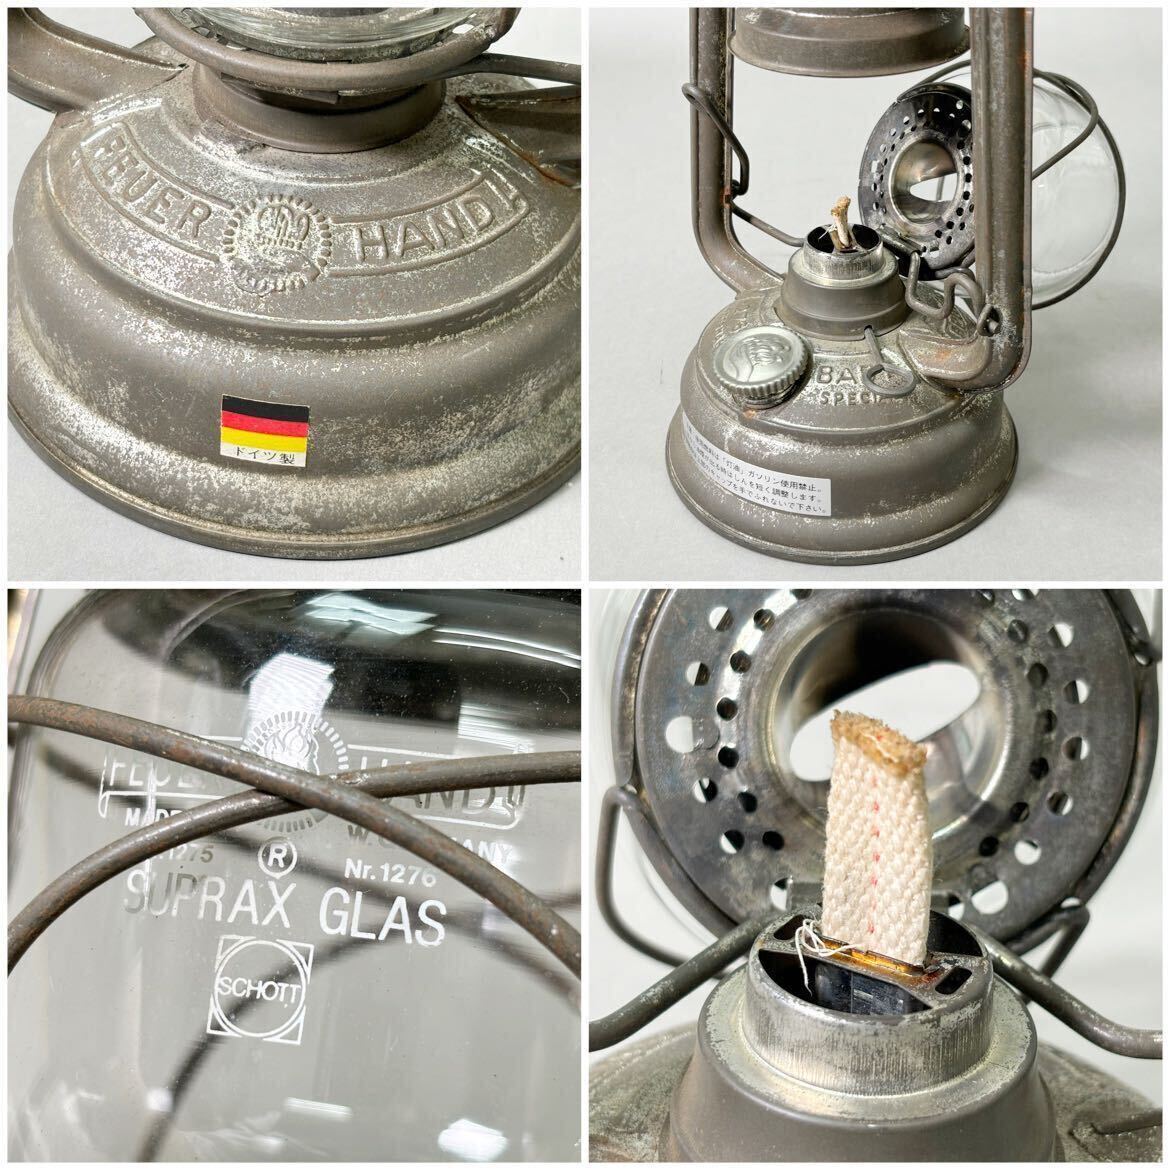 FEUERHAND フュアーハンド 276 BABY SPECIAL STURMKAPPE ドイツ製 灯油ランタン ビンテージ 現状の画像9